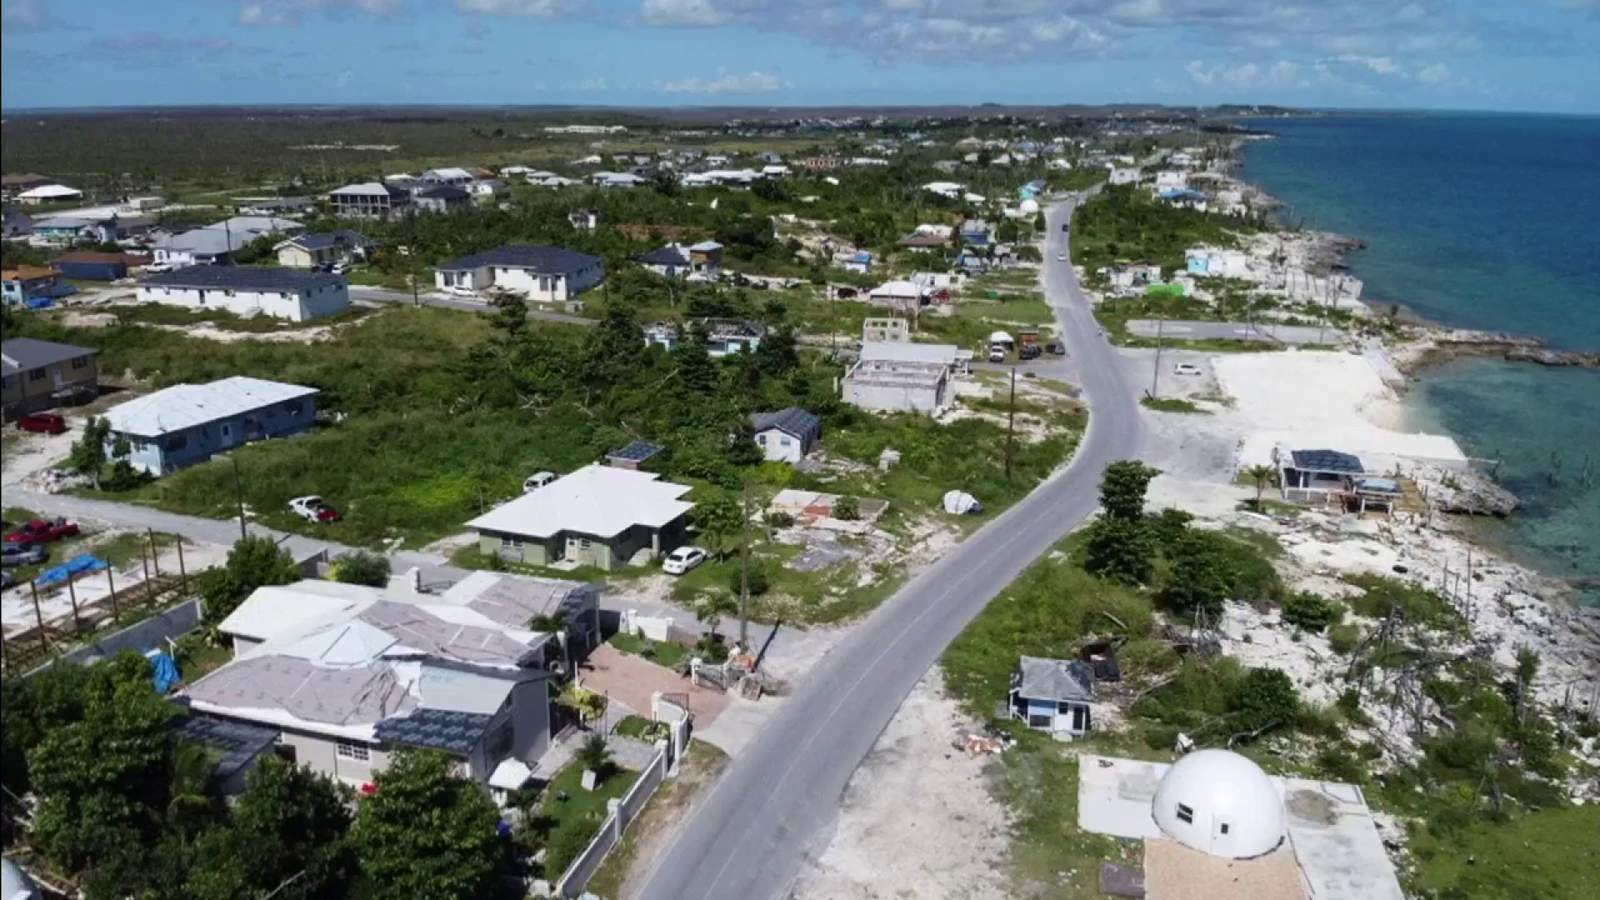 Coronavirus pandemic has slowed Bahamas recovery efforts following destruction of Hurricane Dorian